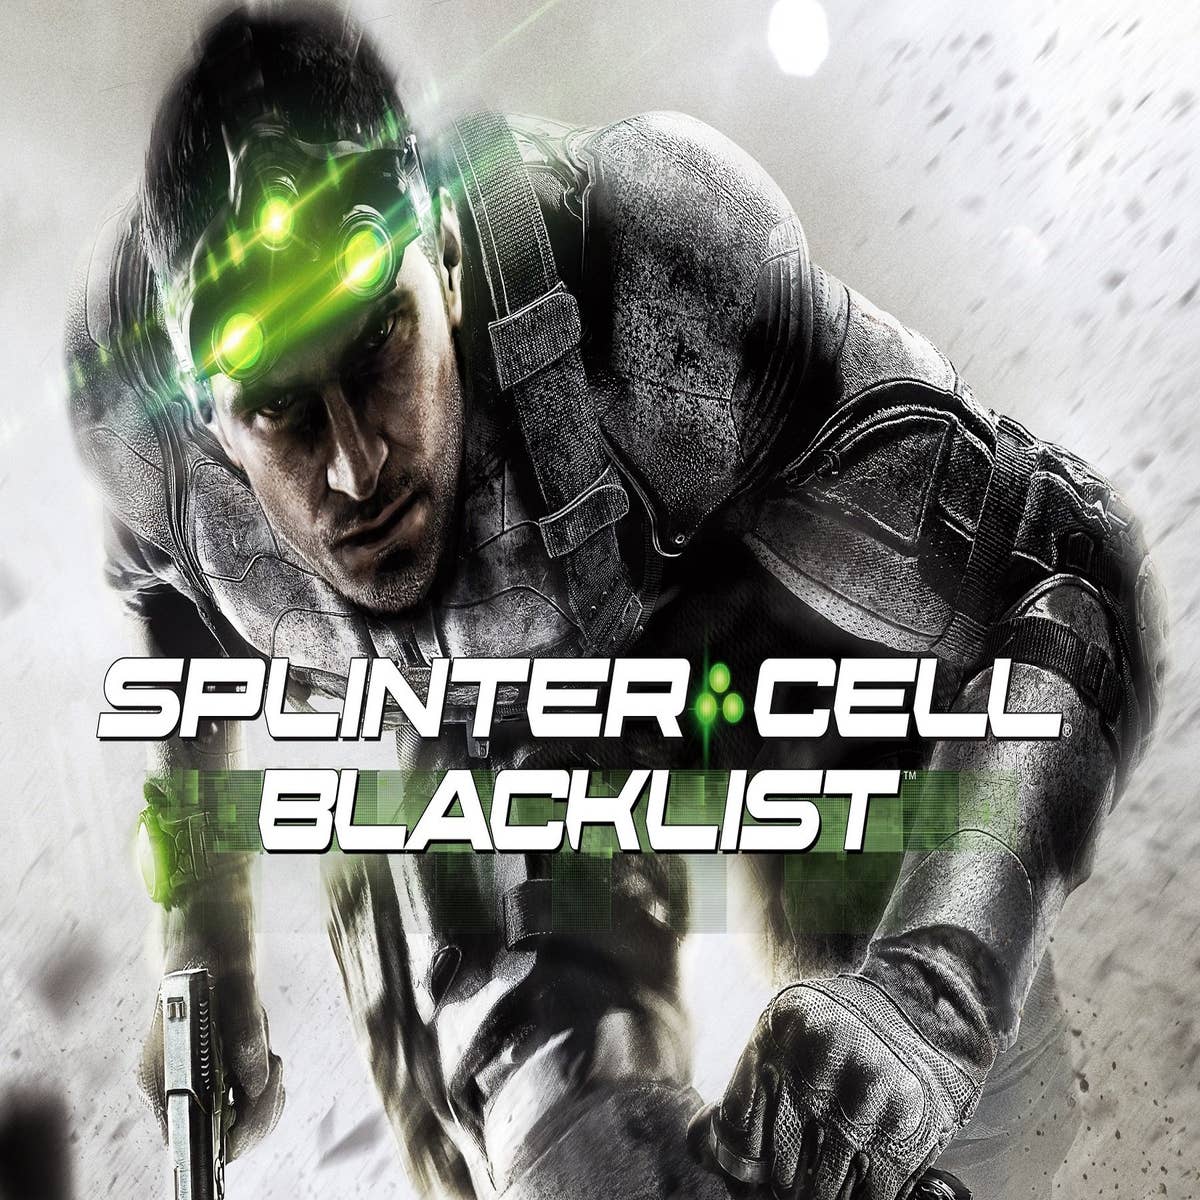 Tom Clancy's Splinter Cell DEMO [PS2] 